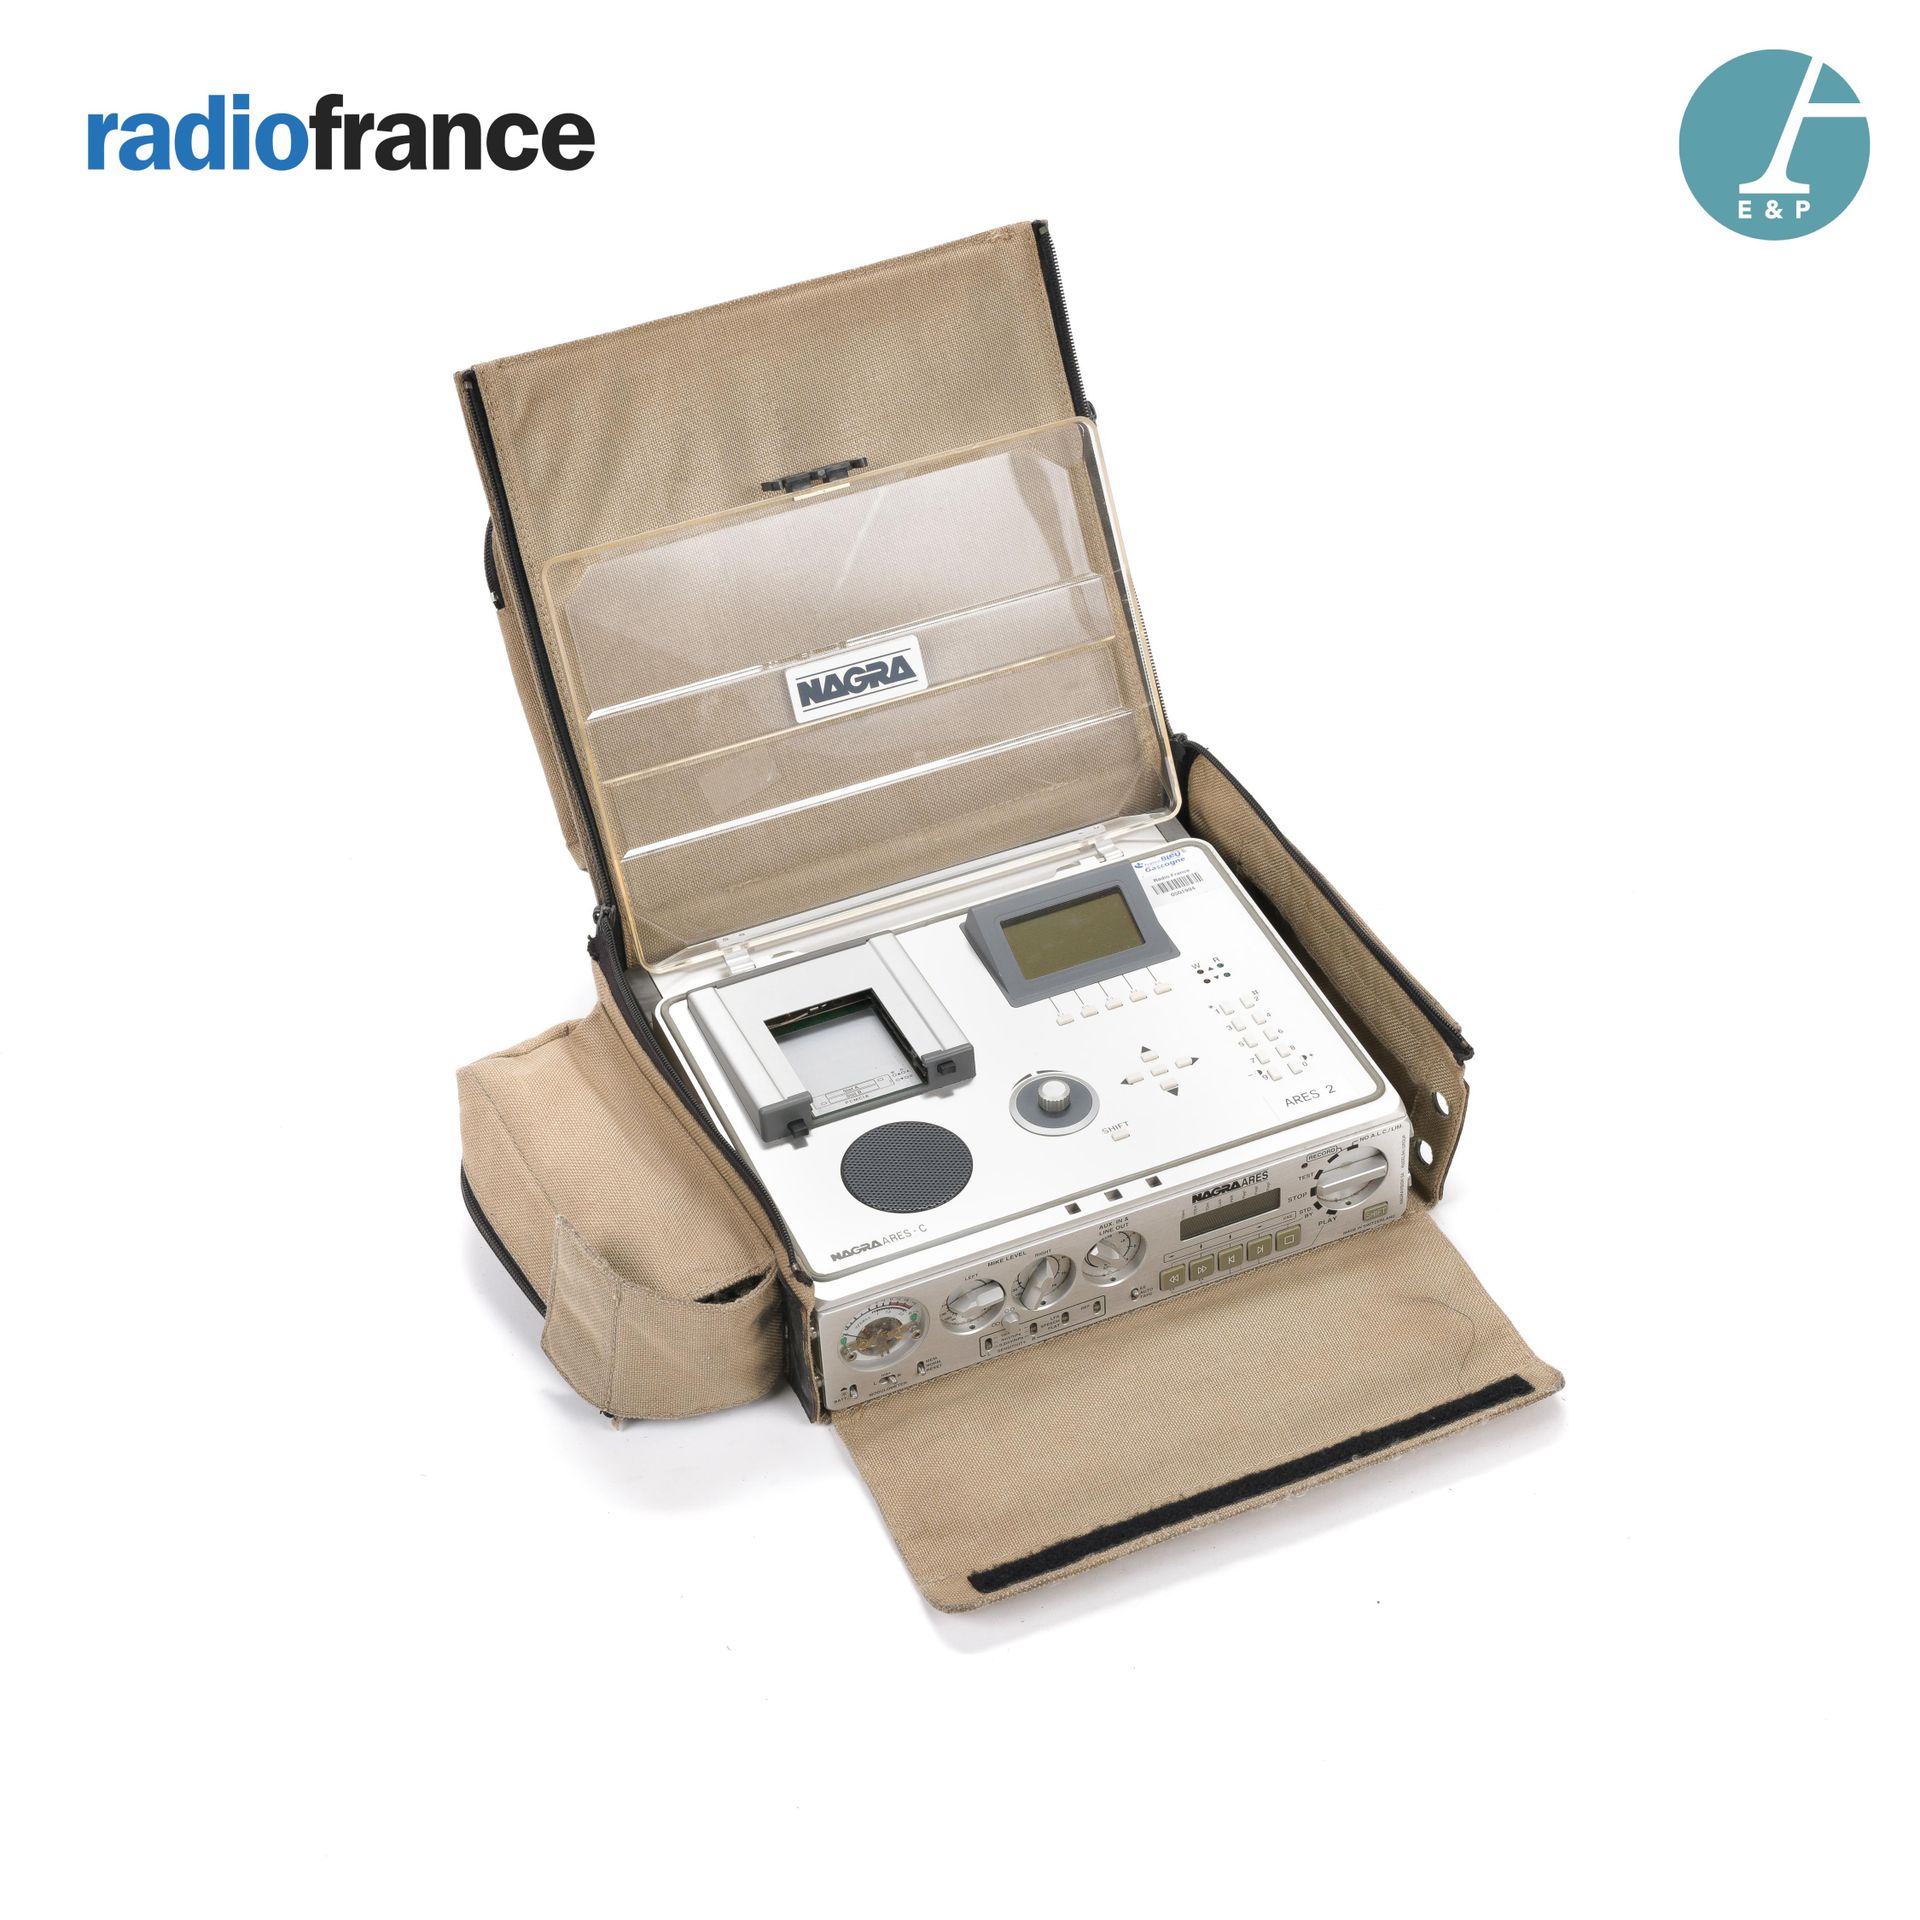 Null NAGRA数字录音机，Ares-C，带有法国广播电台标志的原始米色布袋。

出处：法国布鲁-加斯科涅地区

高：9.5厘米 - 宽：29厘米 - 深：&hellip;